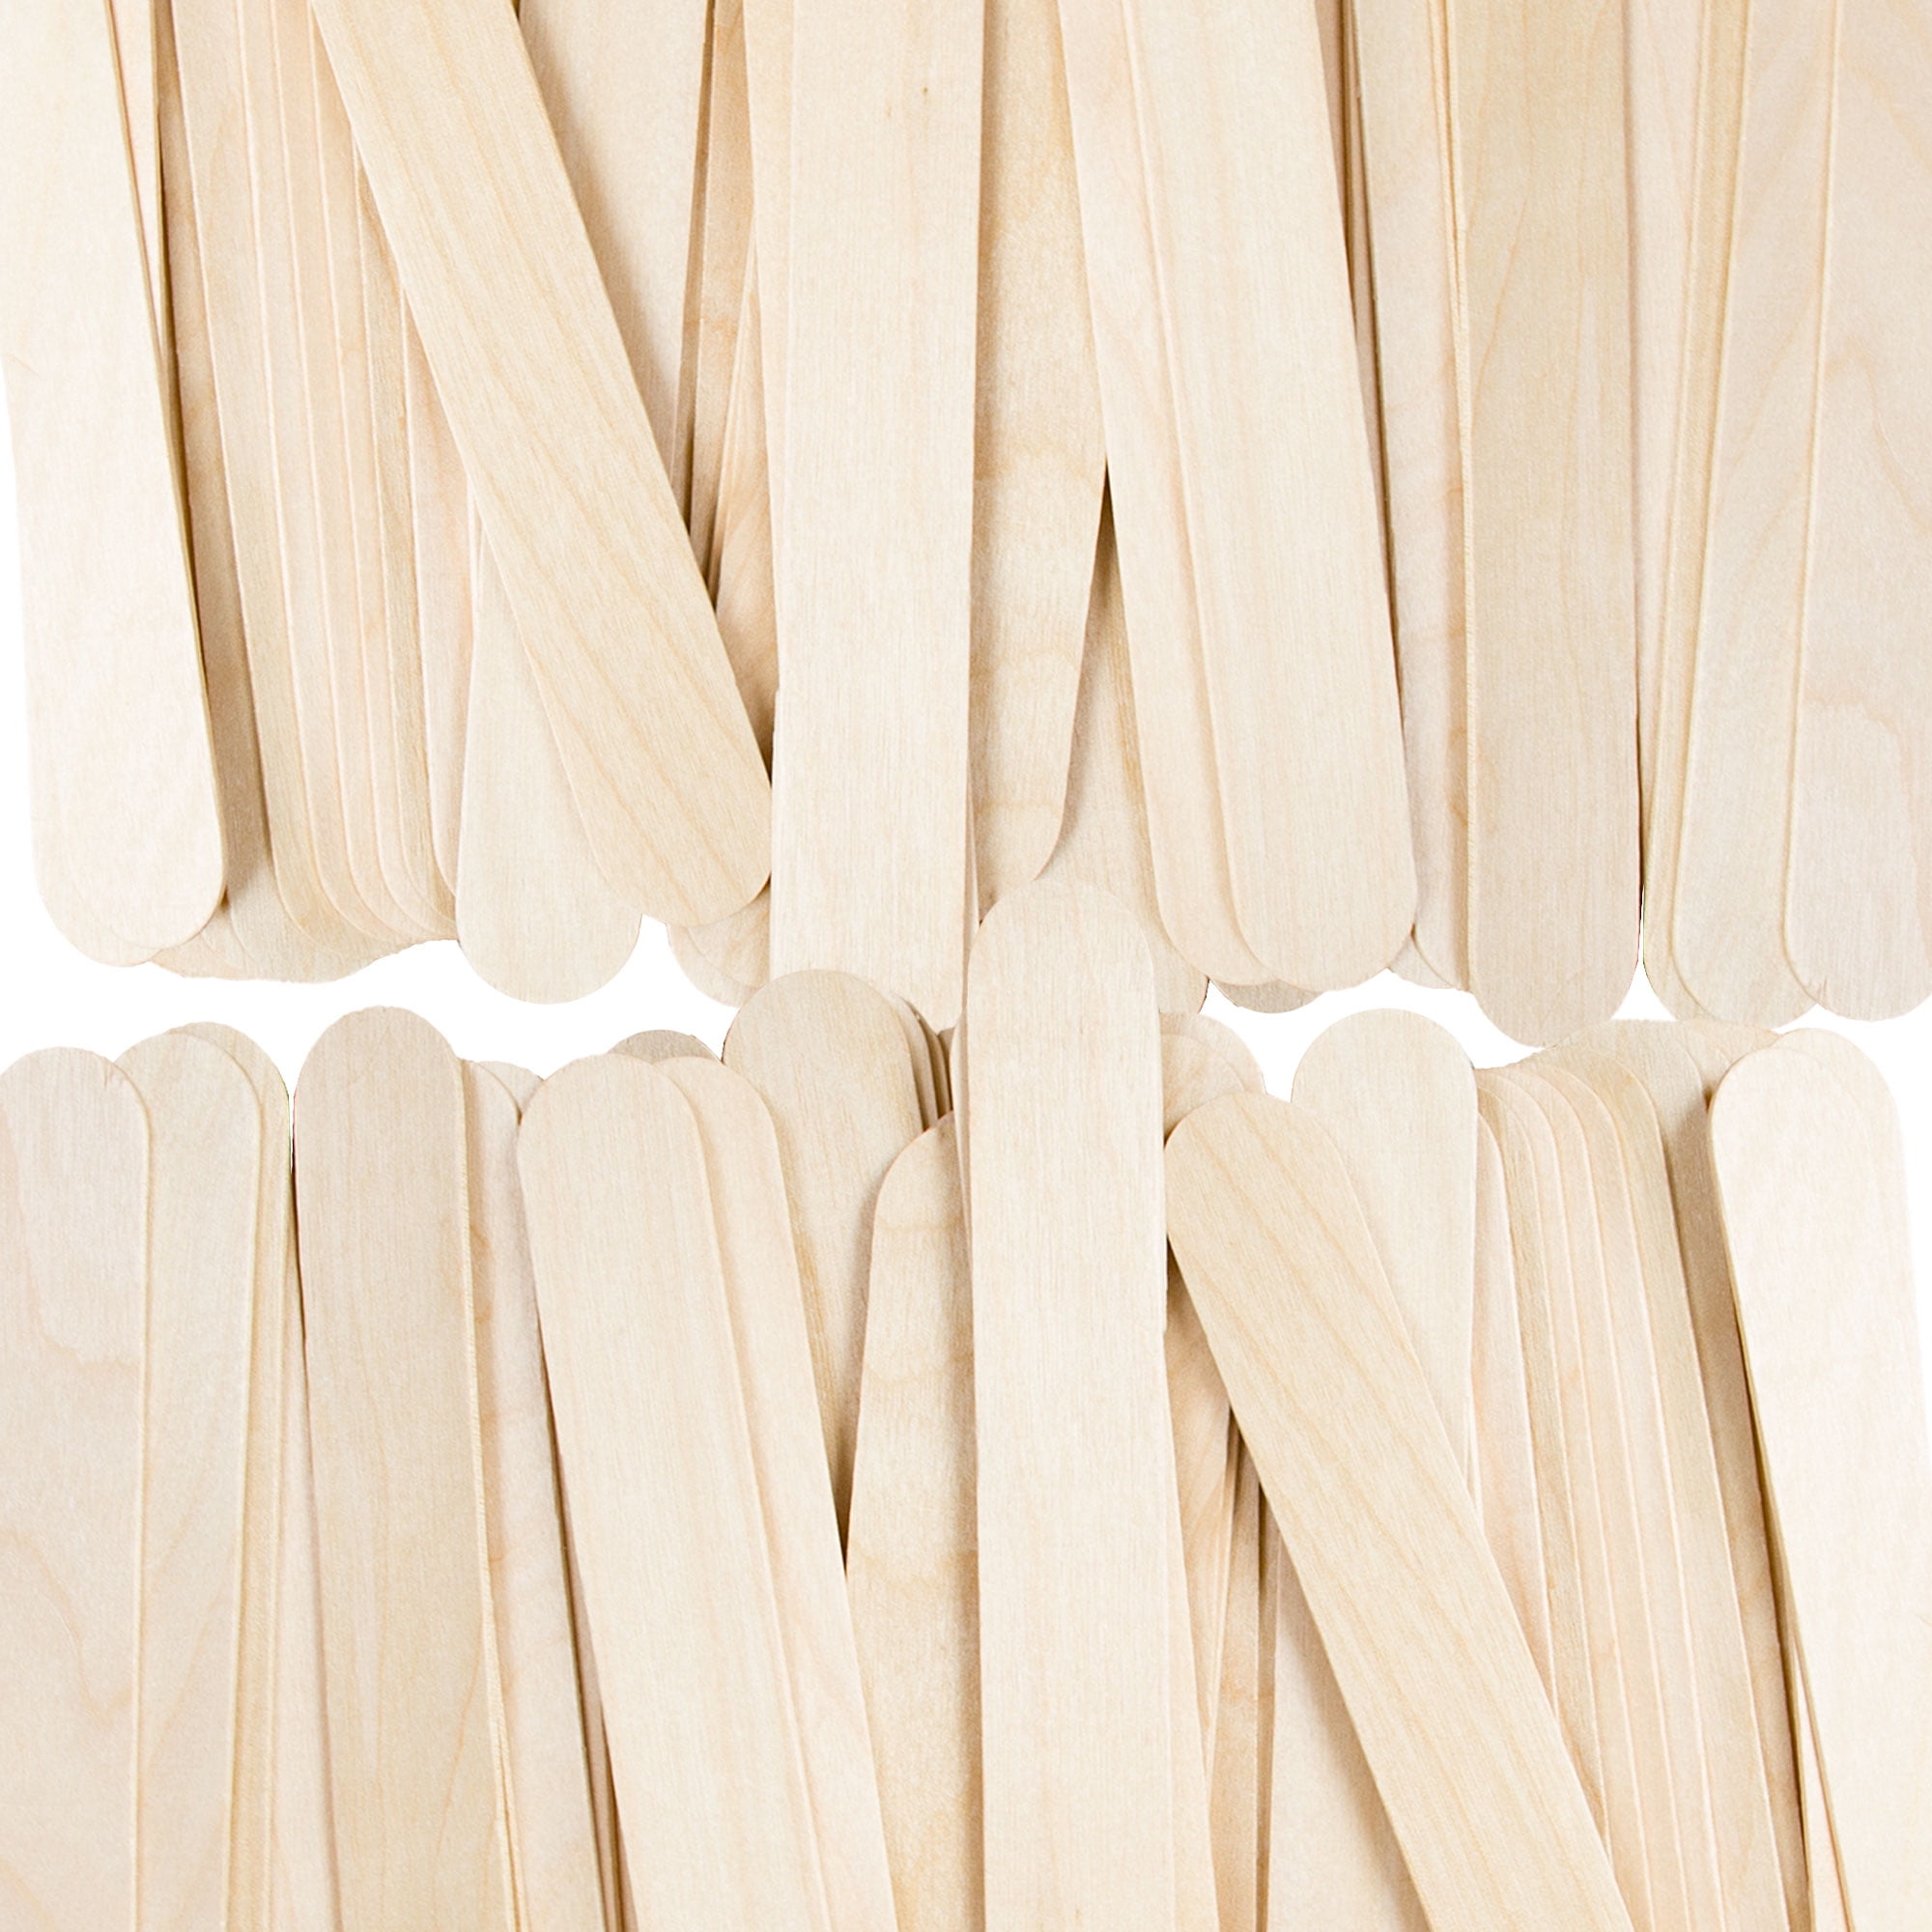 Go Create Super Jumbo Craft Sticks, 45-Pack Extra-Long Wood Craft